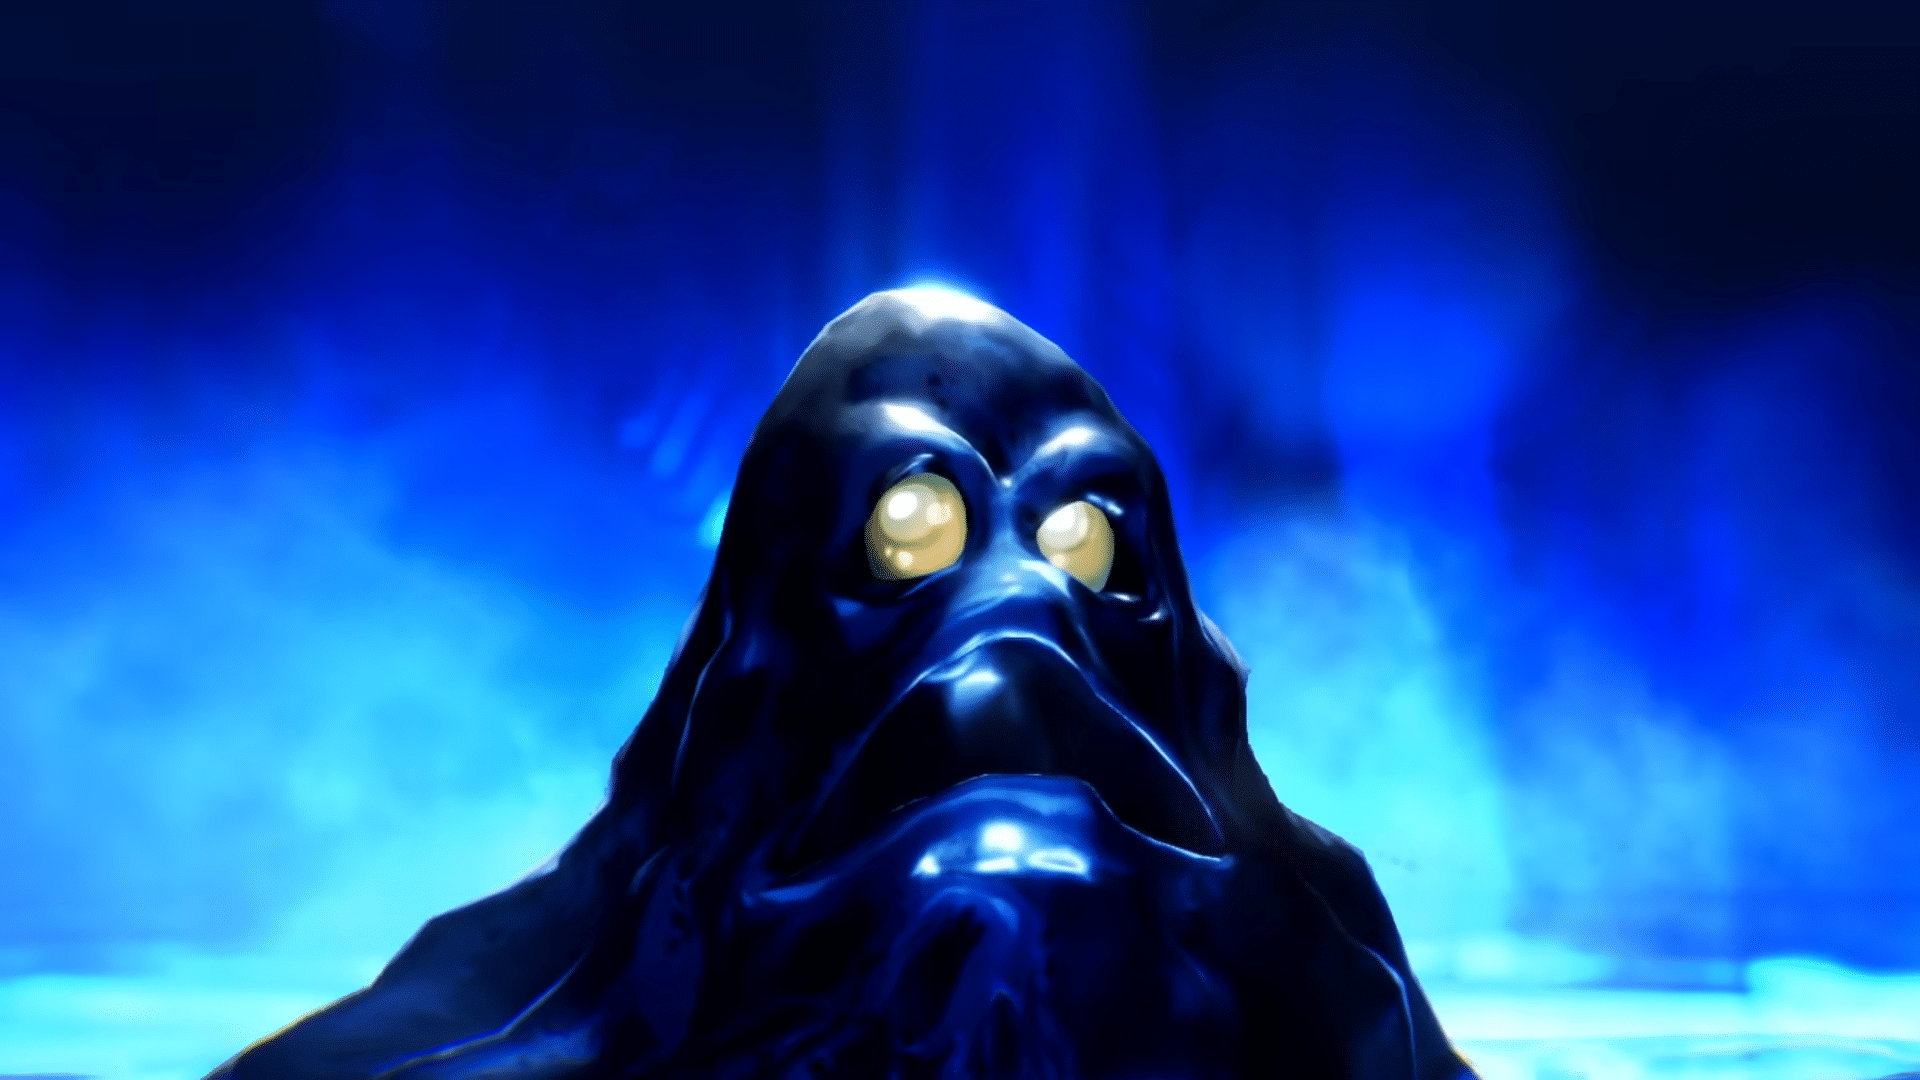 Shin Megami Tensei V Daily Demon Video #157 Showcases the Incomplete Monstrosity, Black Ooze